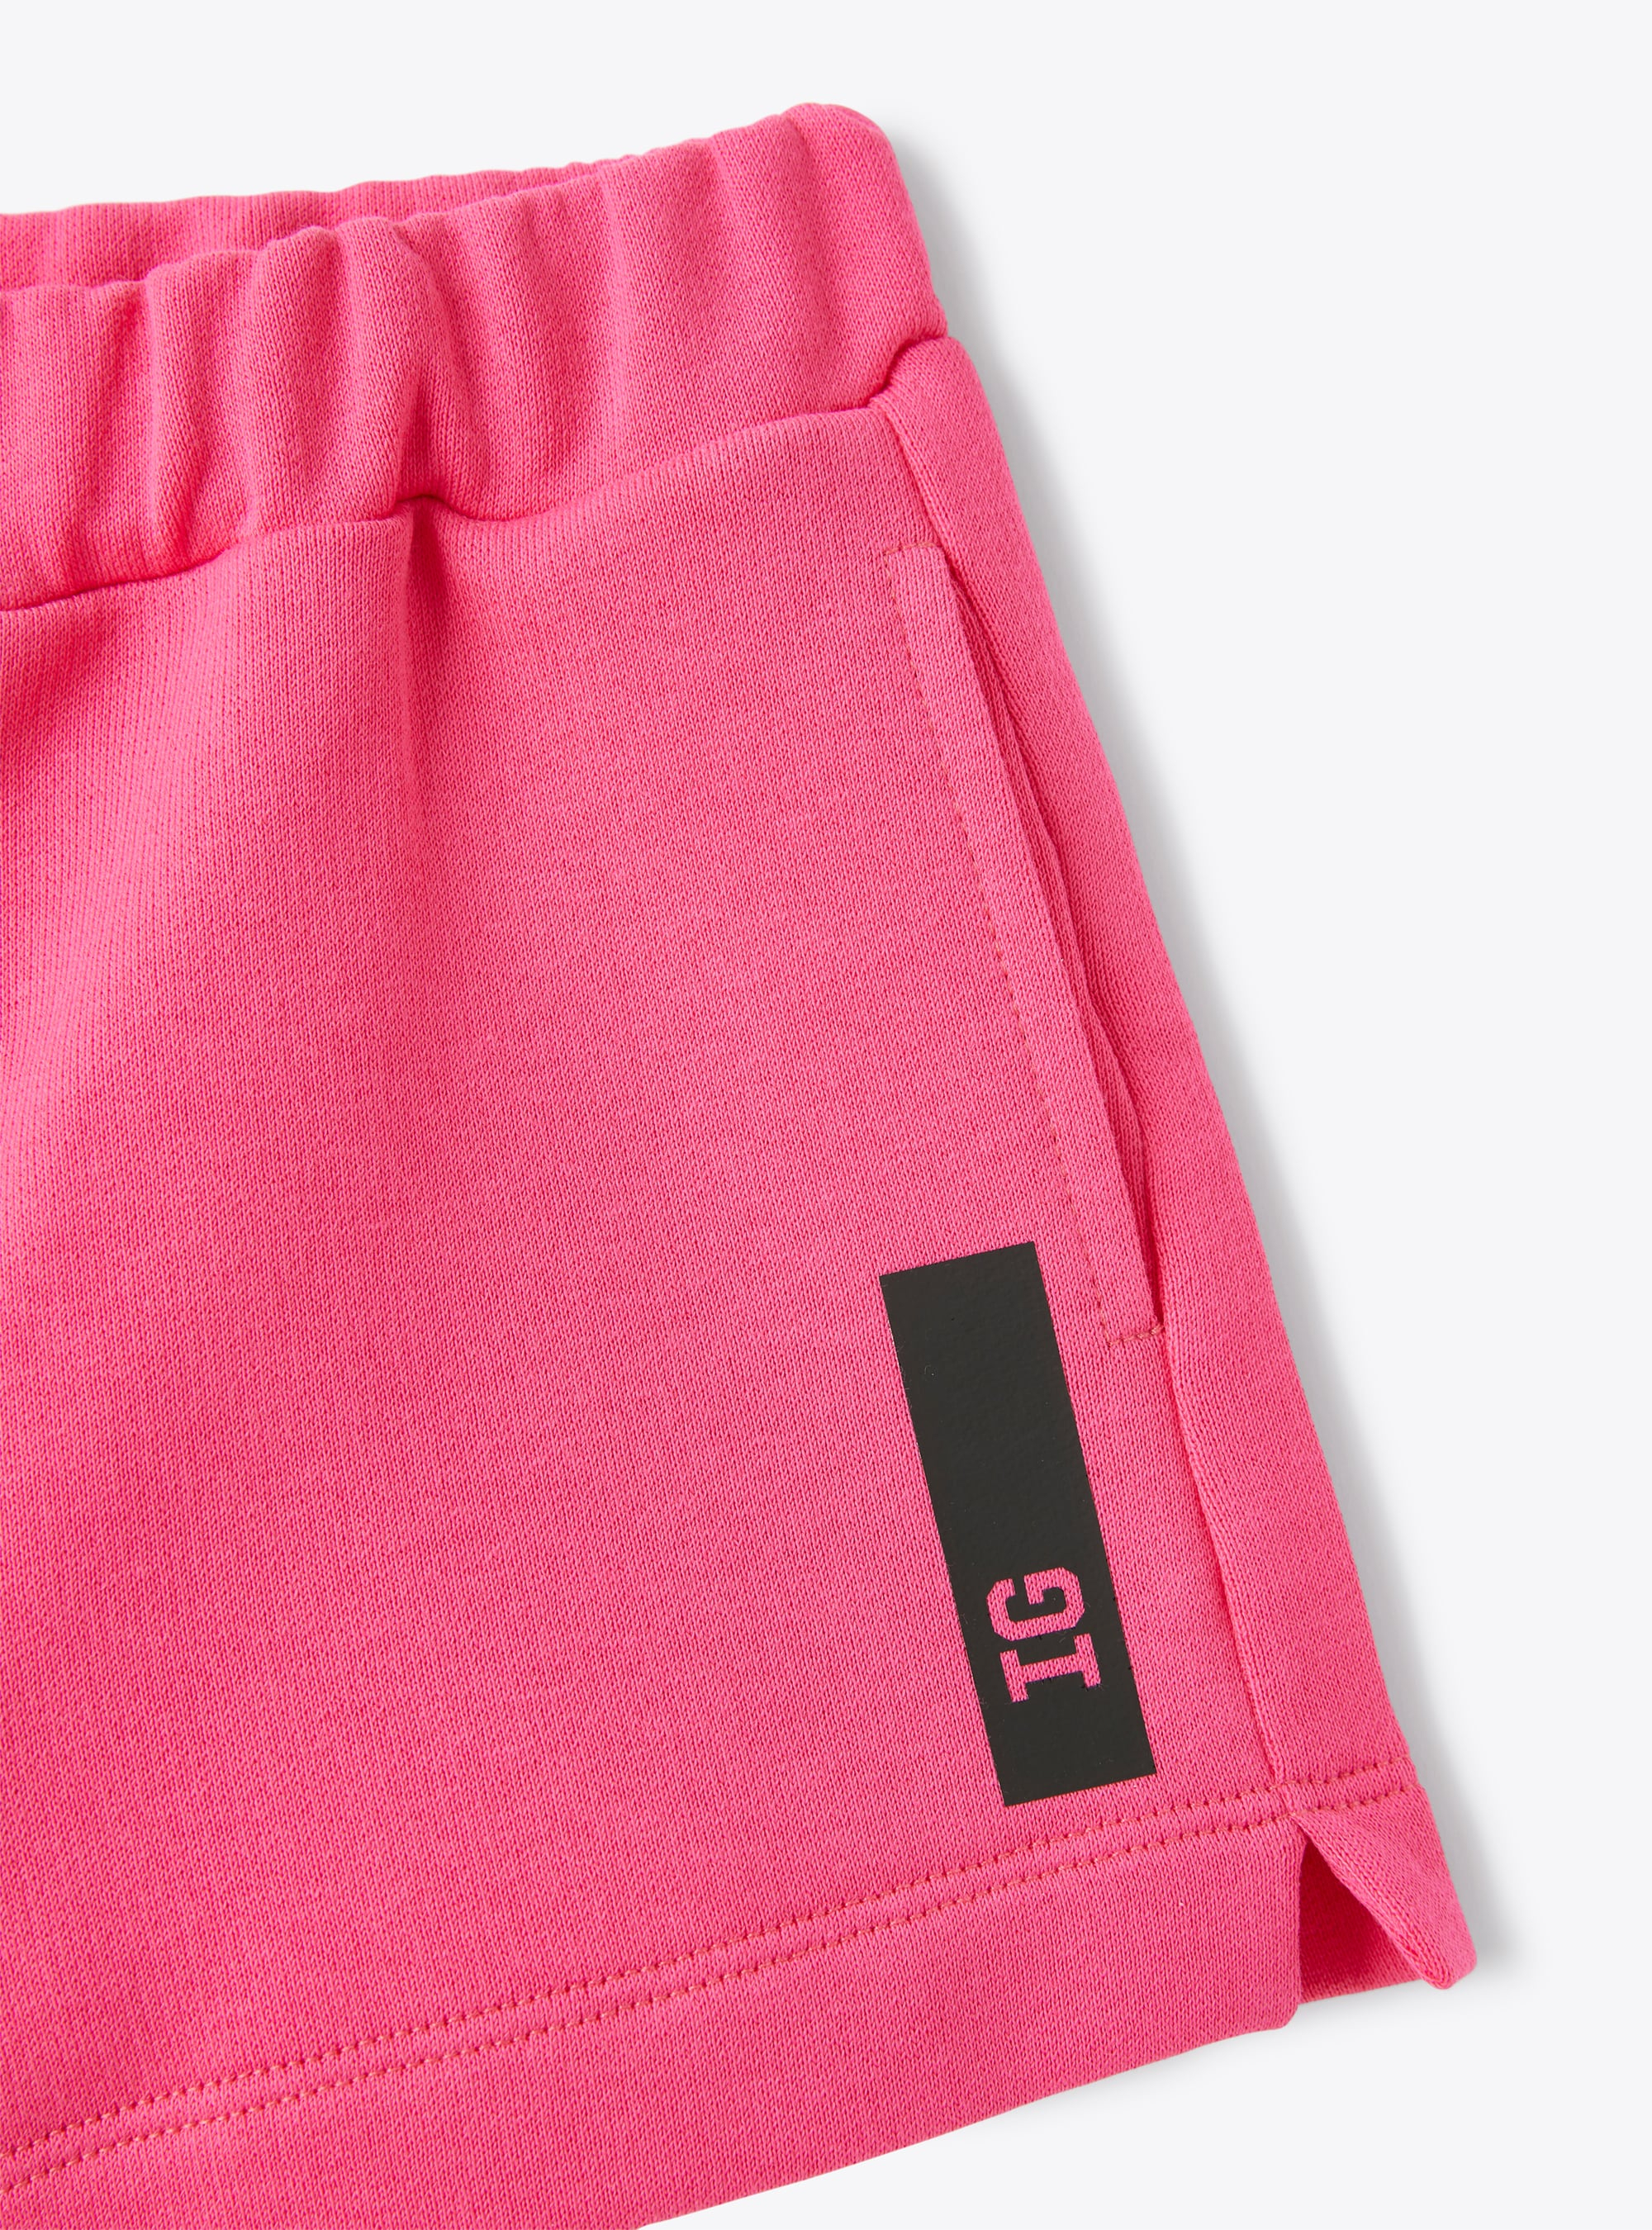 Shorts in fuchsia-pink fleece - Fuchsia | Il Gufo